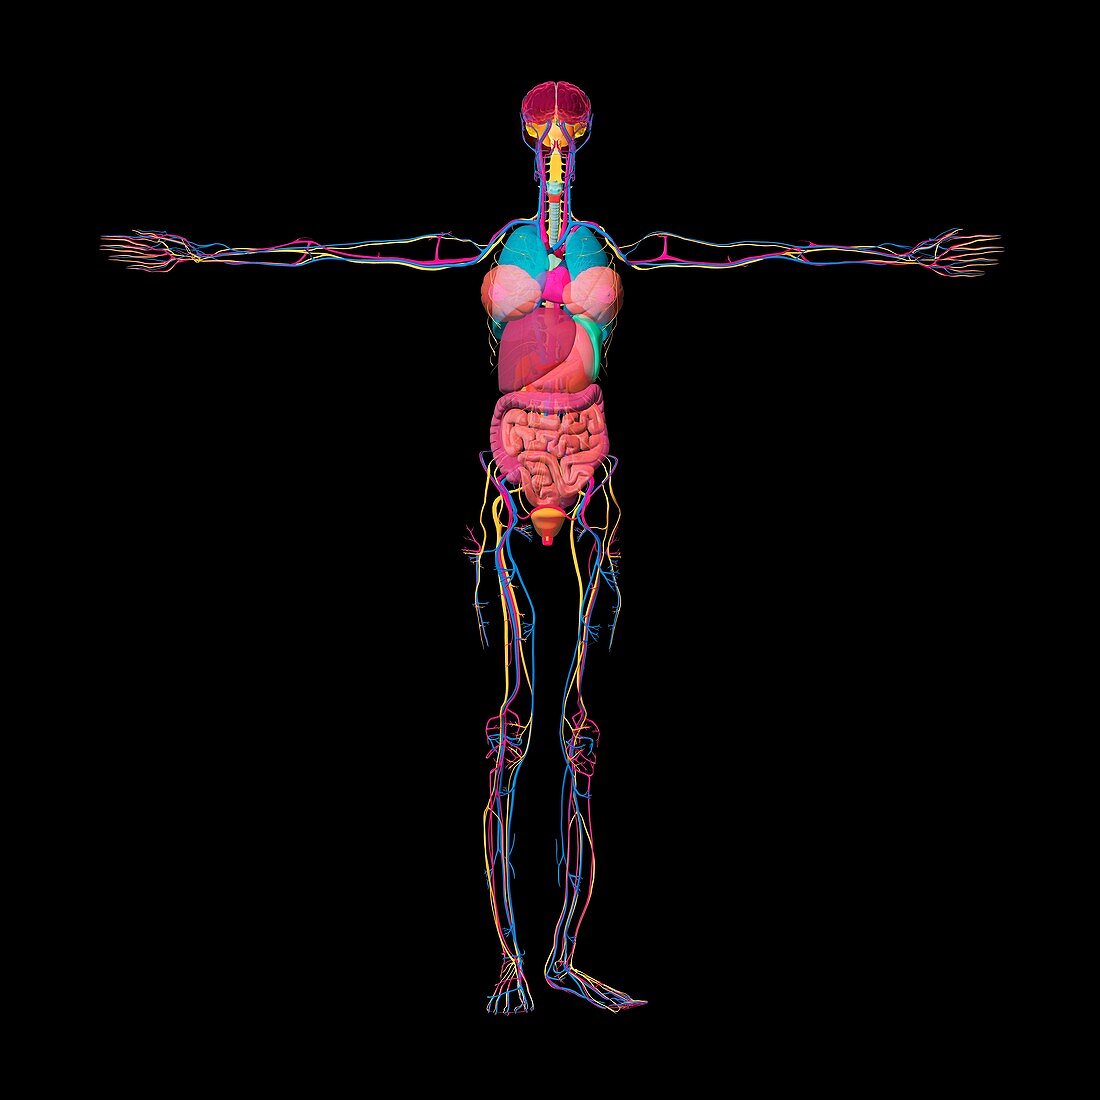 Female anatomy, illustration